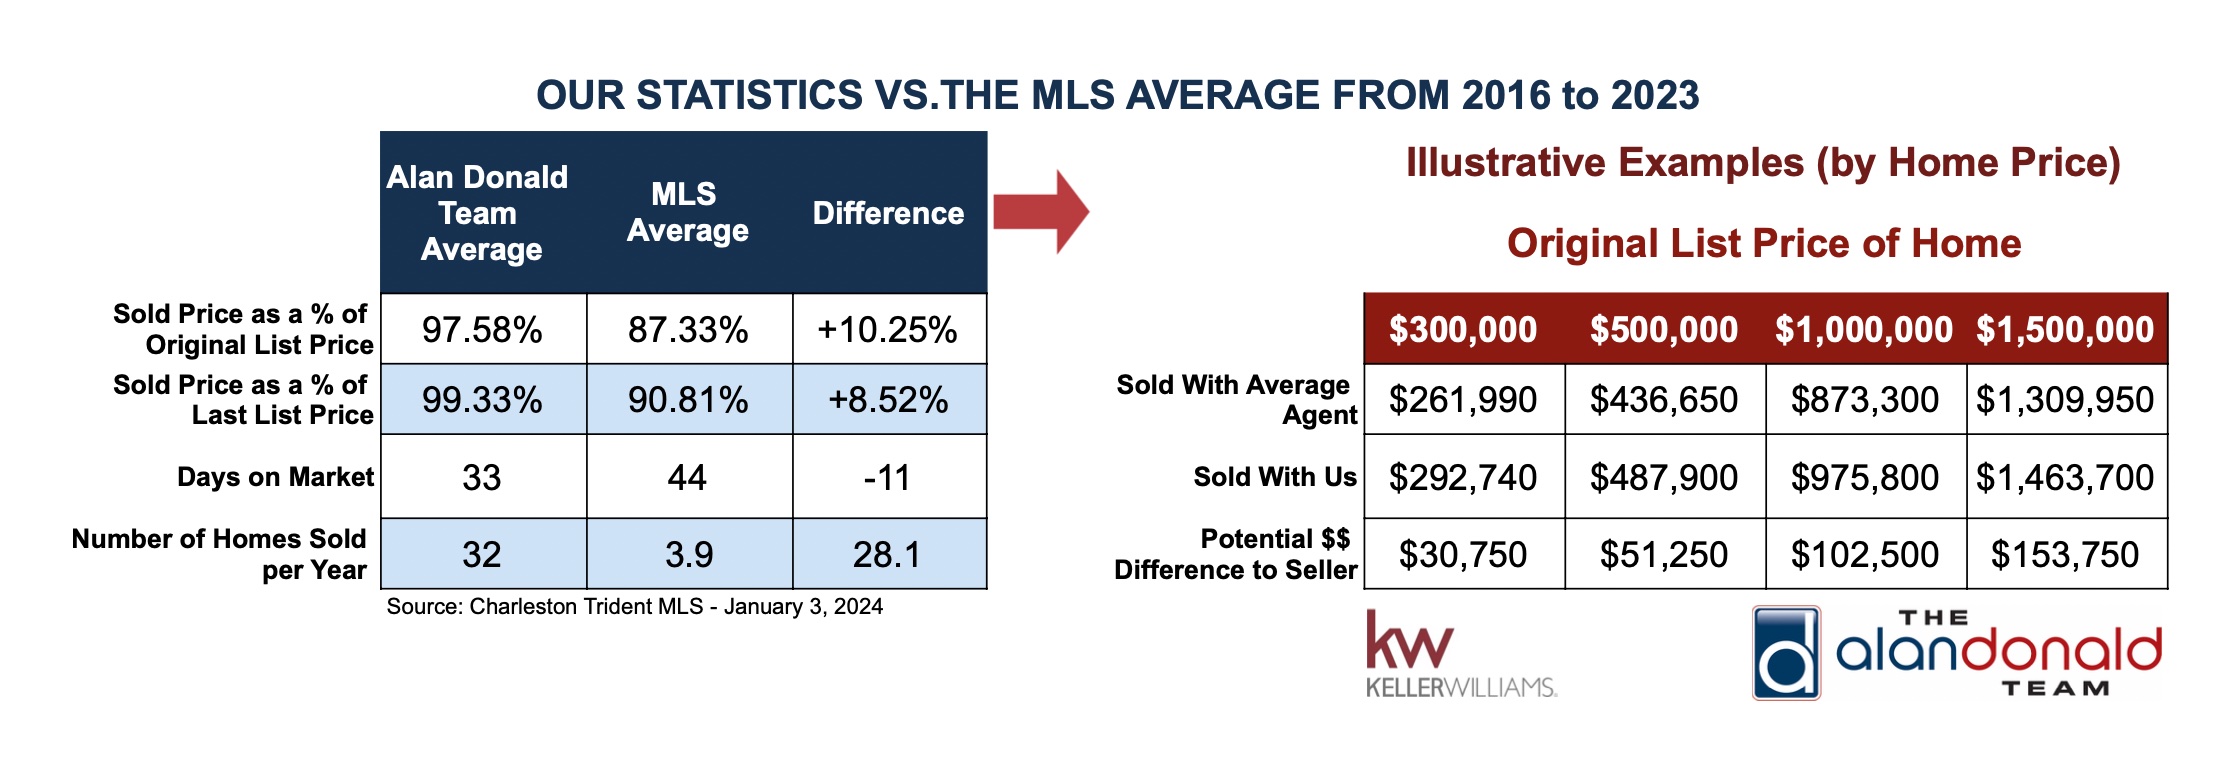 Our Statistics vs MLS